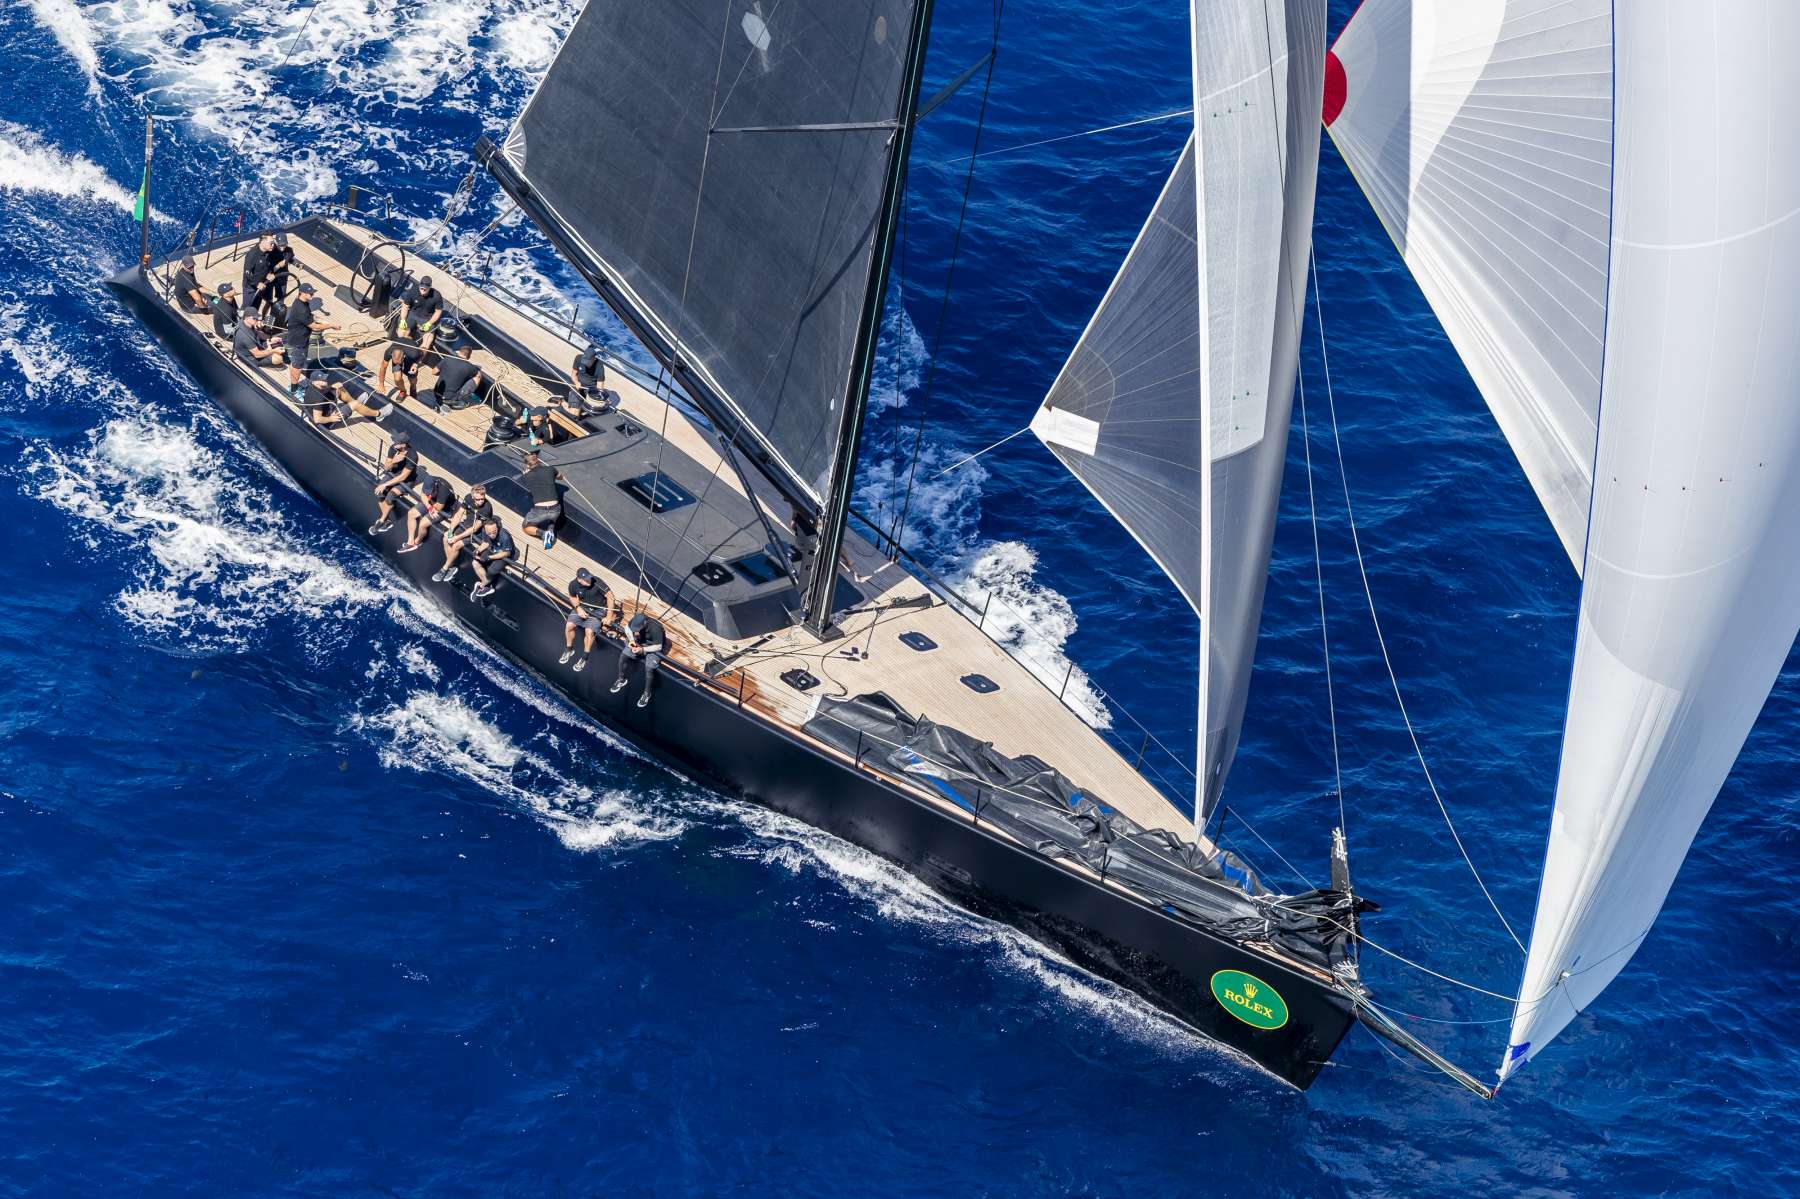 Maxi Yacht Rolex Cup: east wind carries fleet around La Maddalena archipelago - Press Release - Yacht Club Costa Smeralda